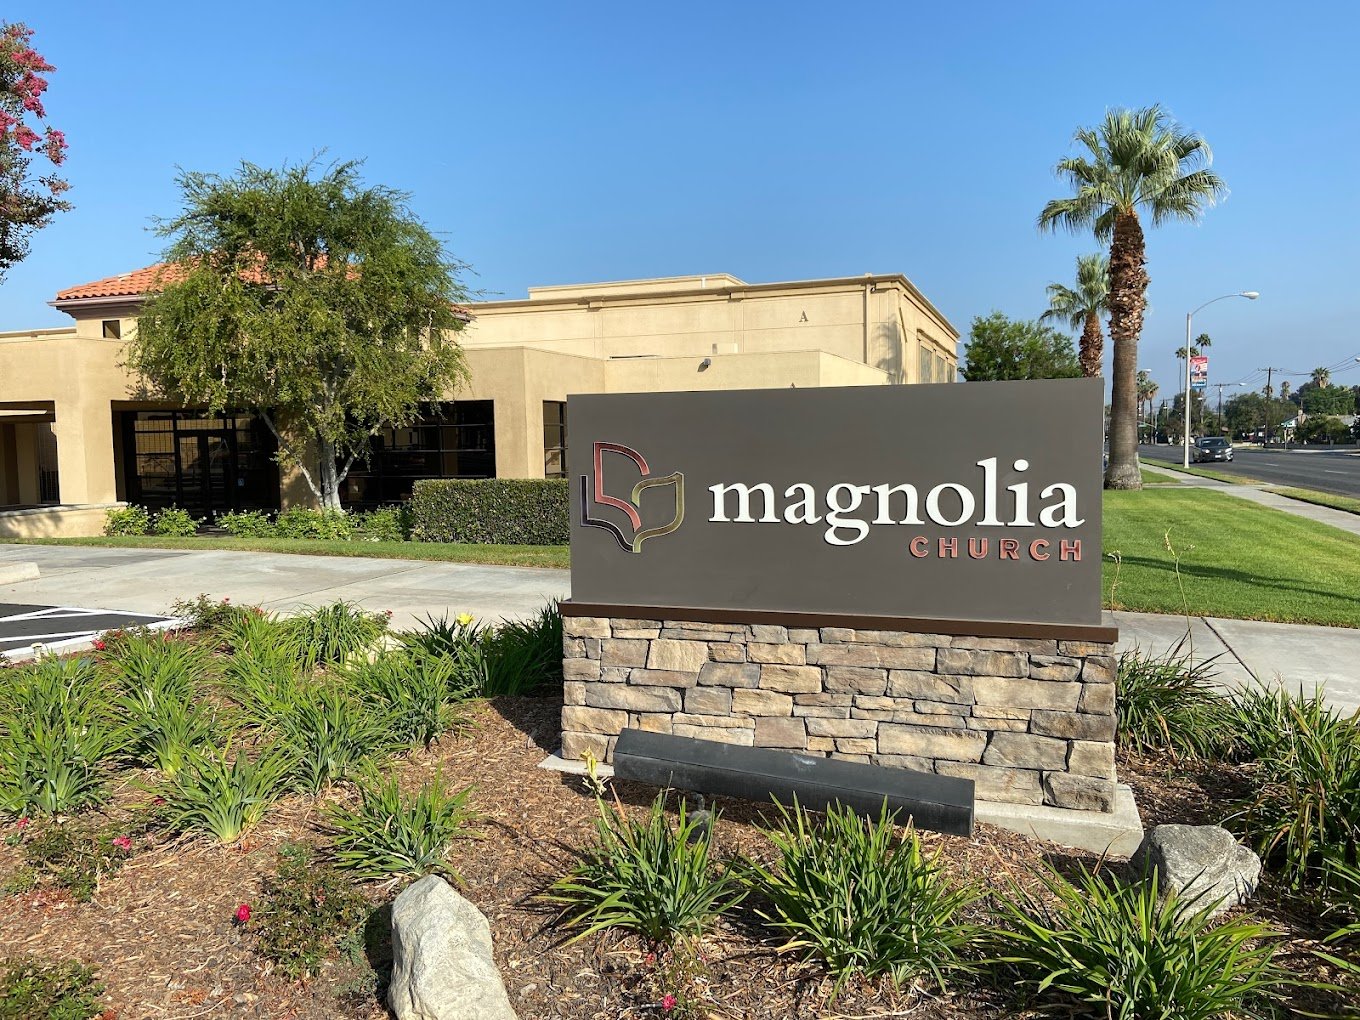 Magnolia Church Renovations and Master Plan